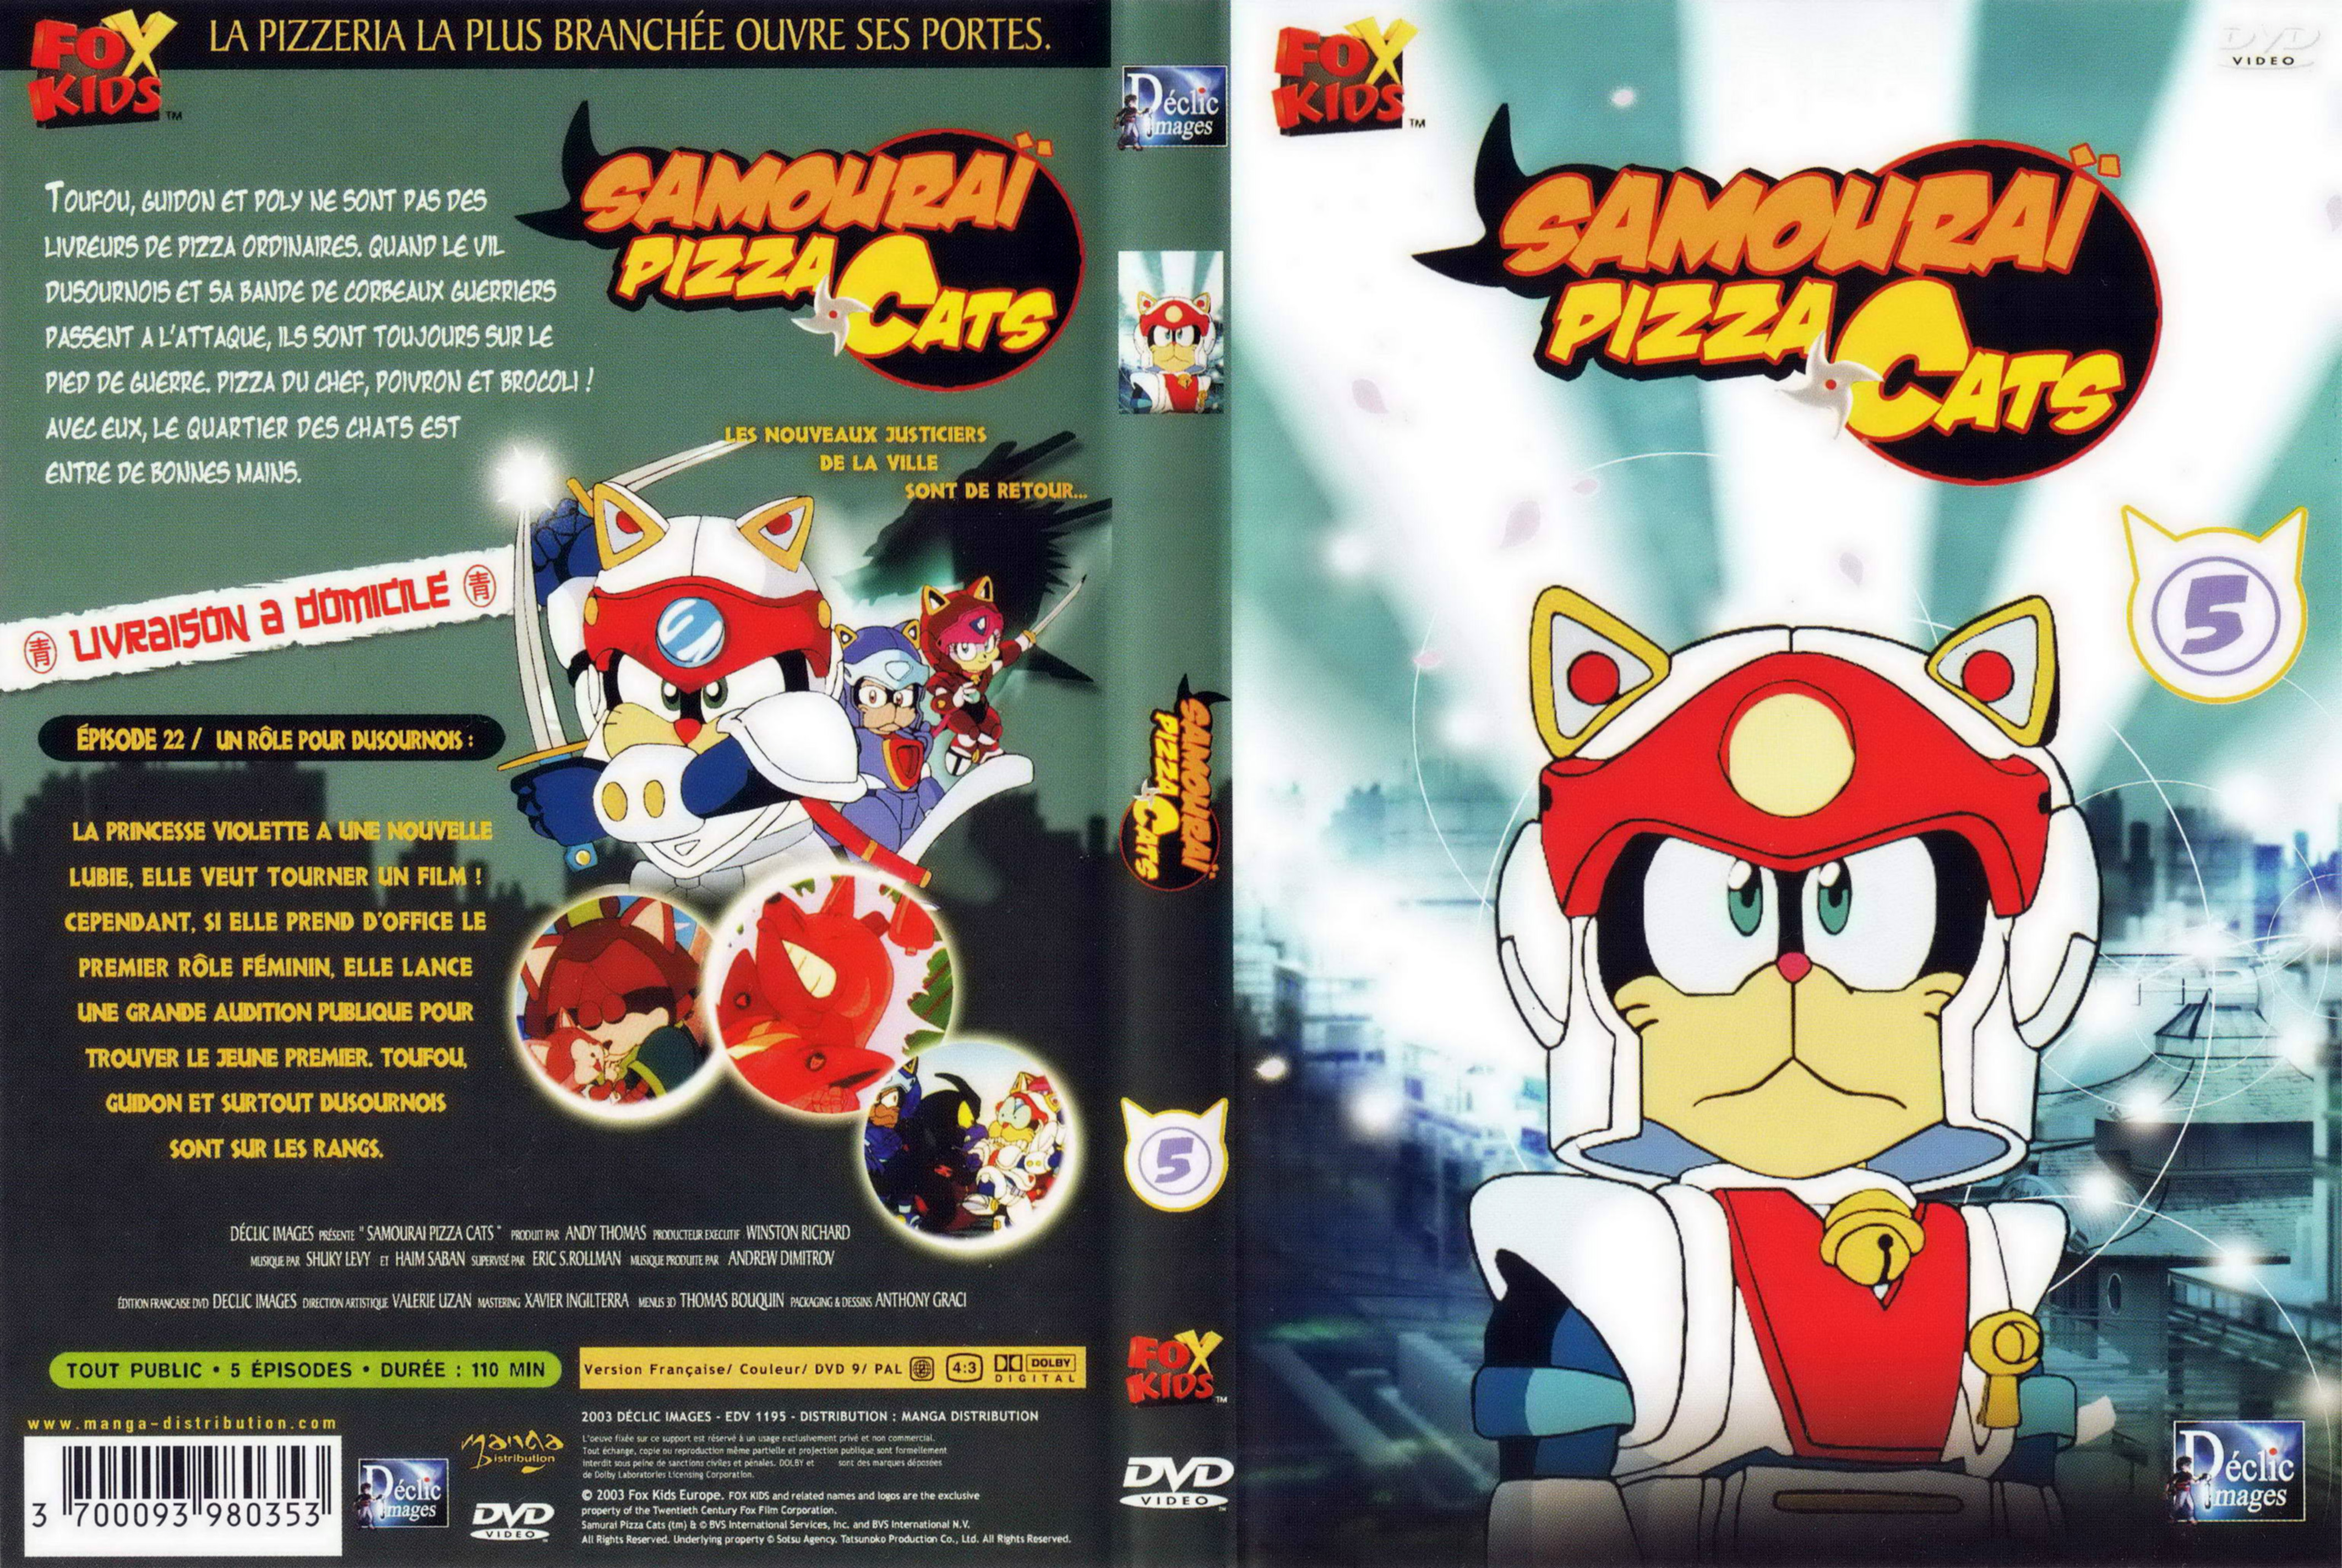 Jaquette DVD Samourai pizza cats dvd 5